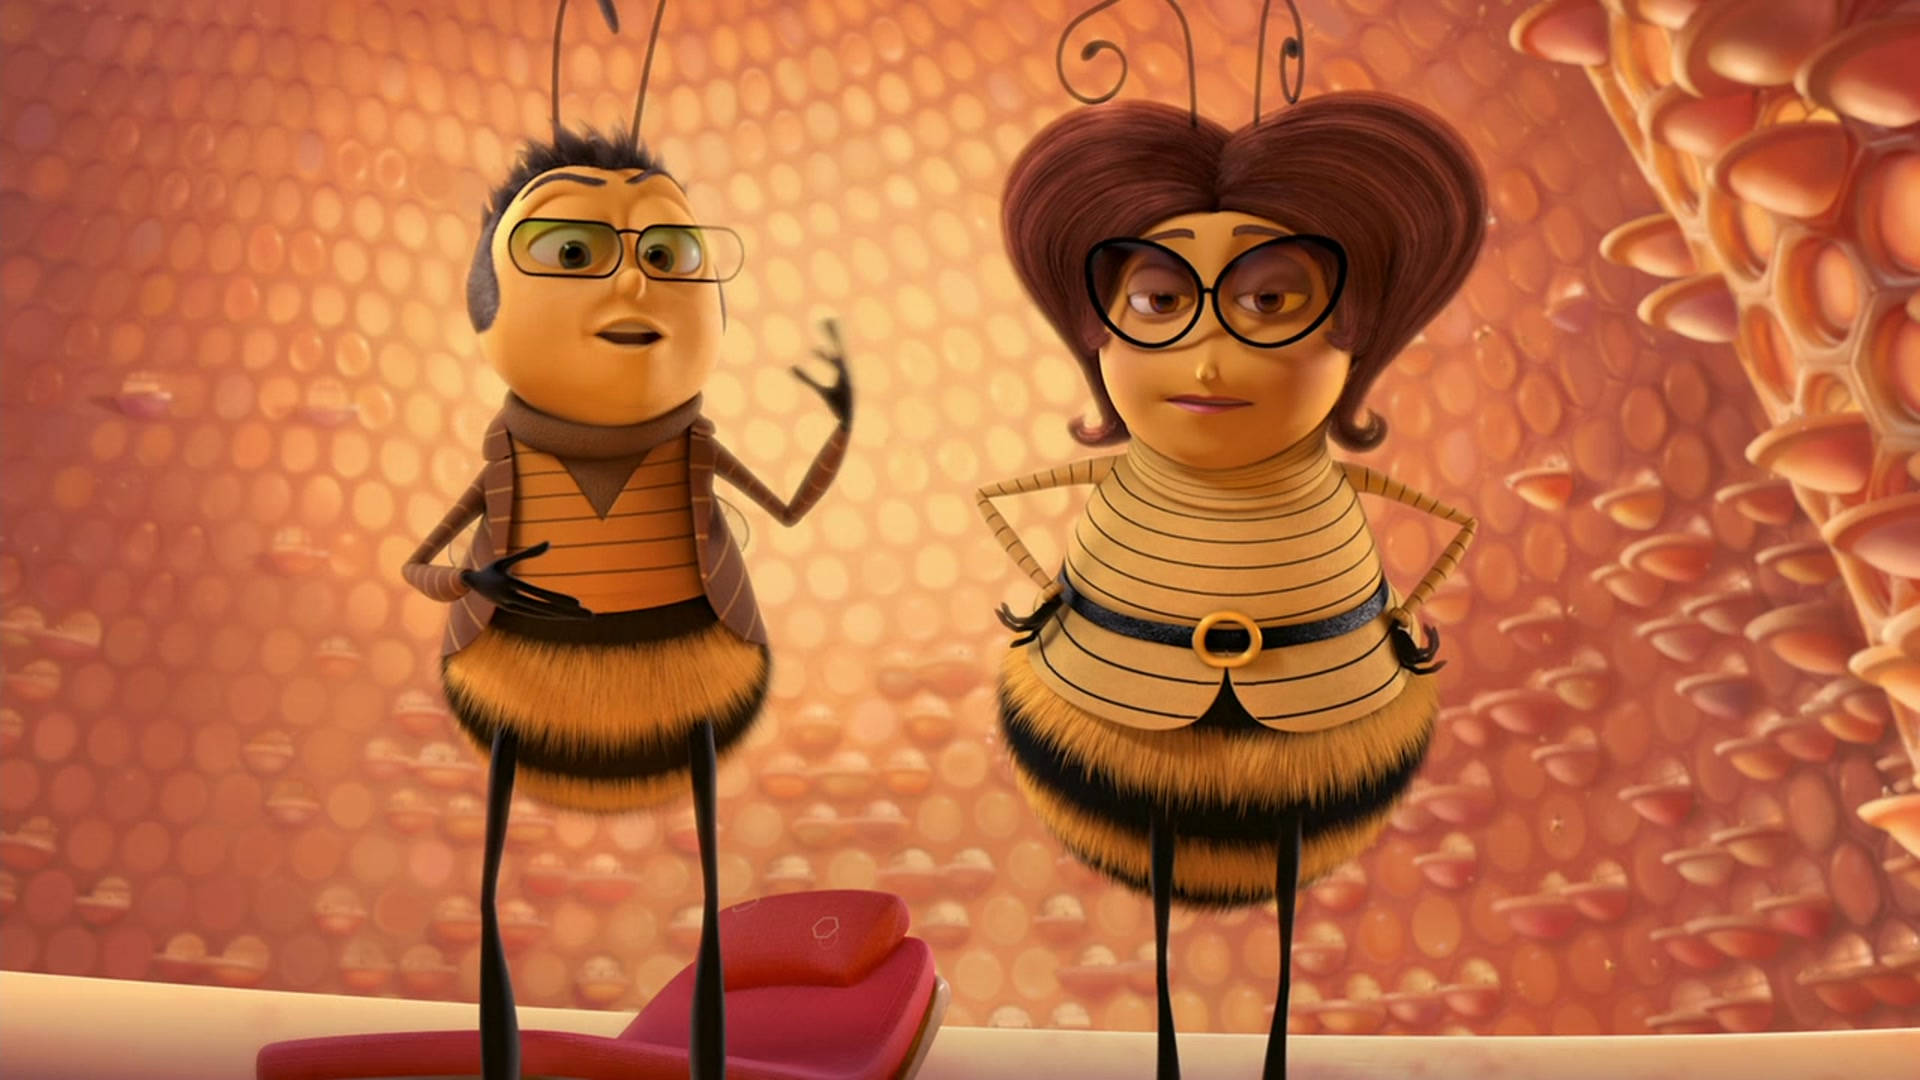 Bees Movie - Bees Movie Wallpaper